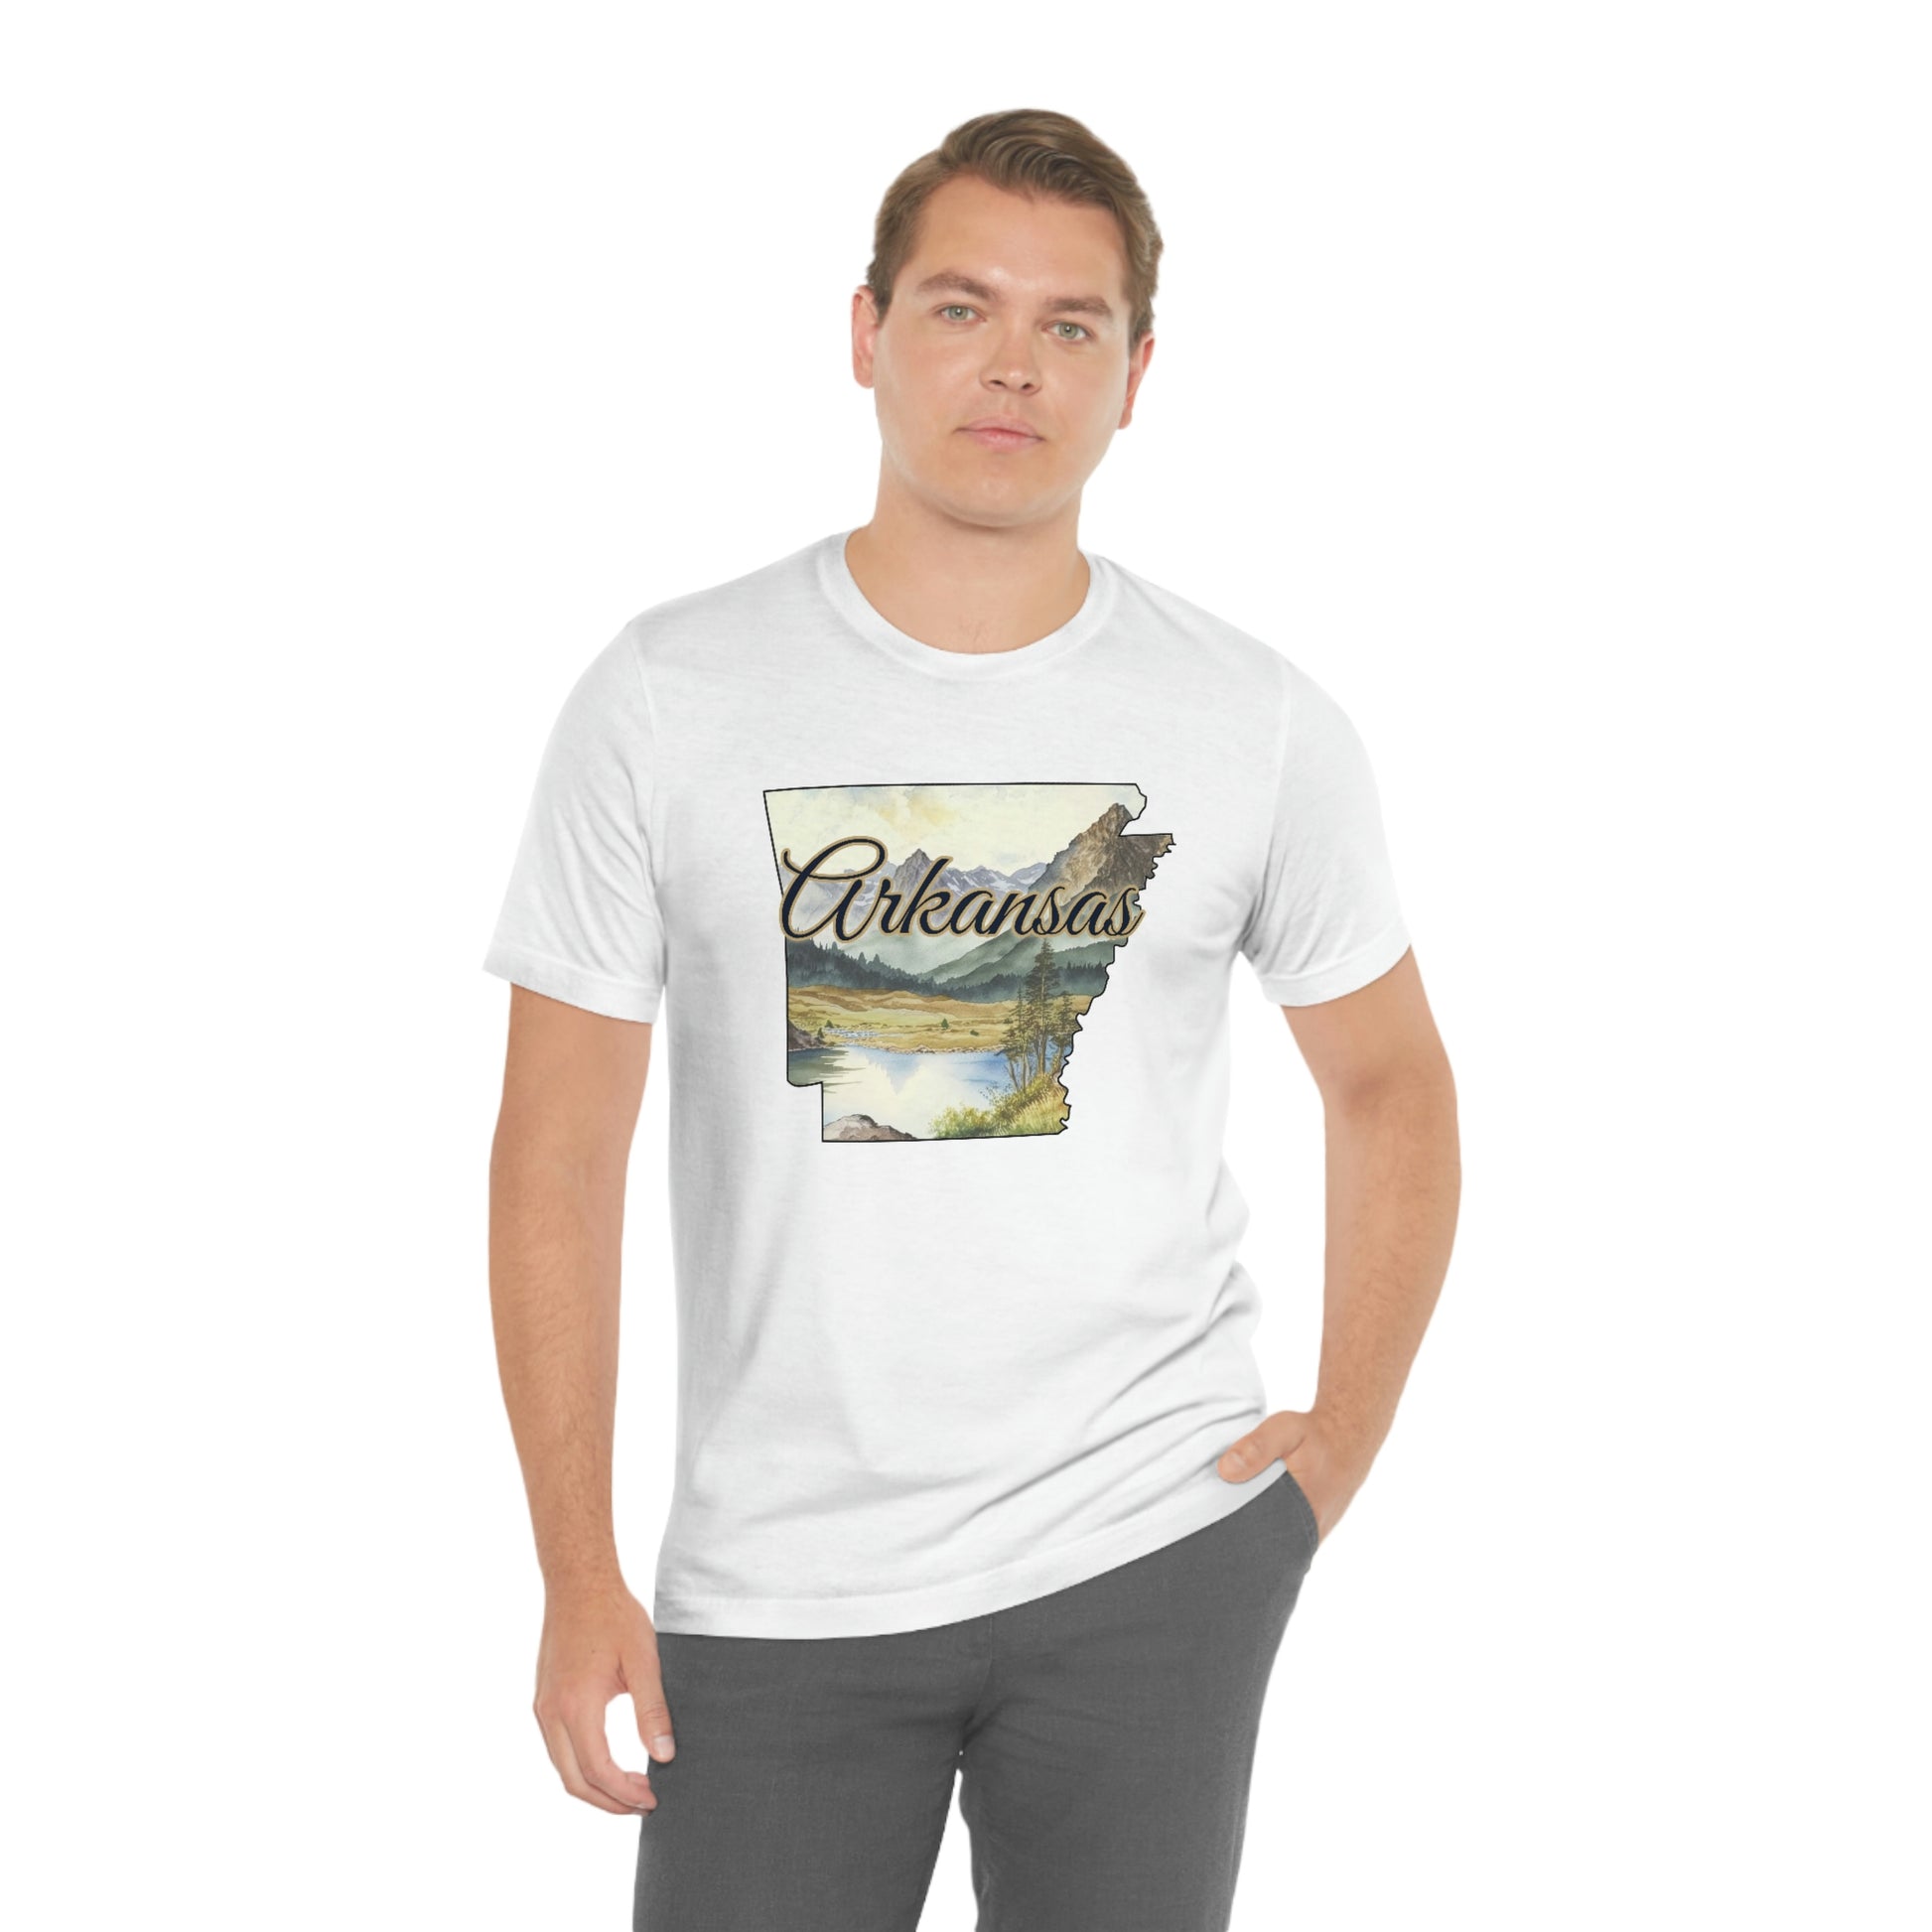 Arkansas Landscape Unisex Jersey Short Sleeve Tee Tshirt T-shirt